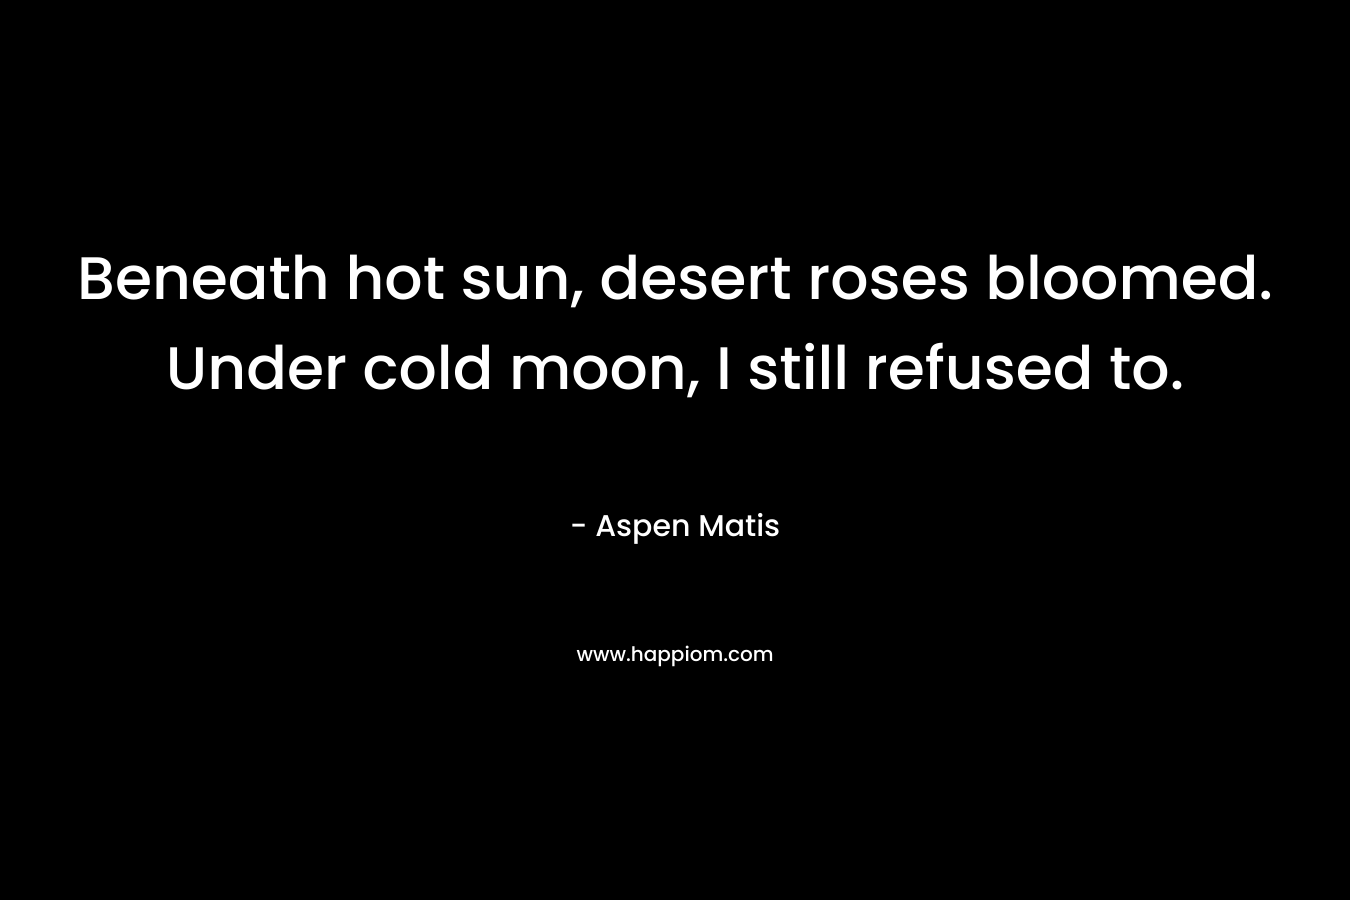 Beneath hot sun, desert roses bloomed. Under cold moon, I still refused to.